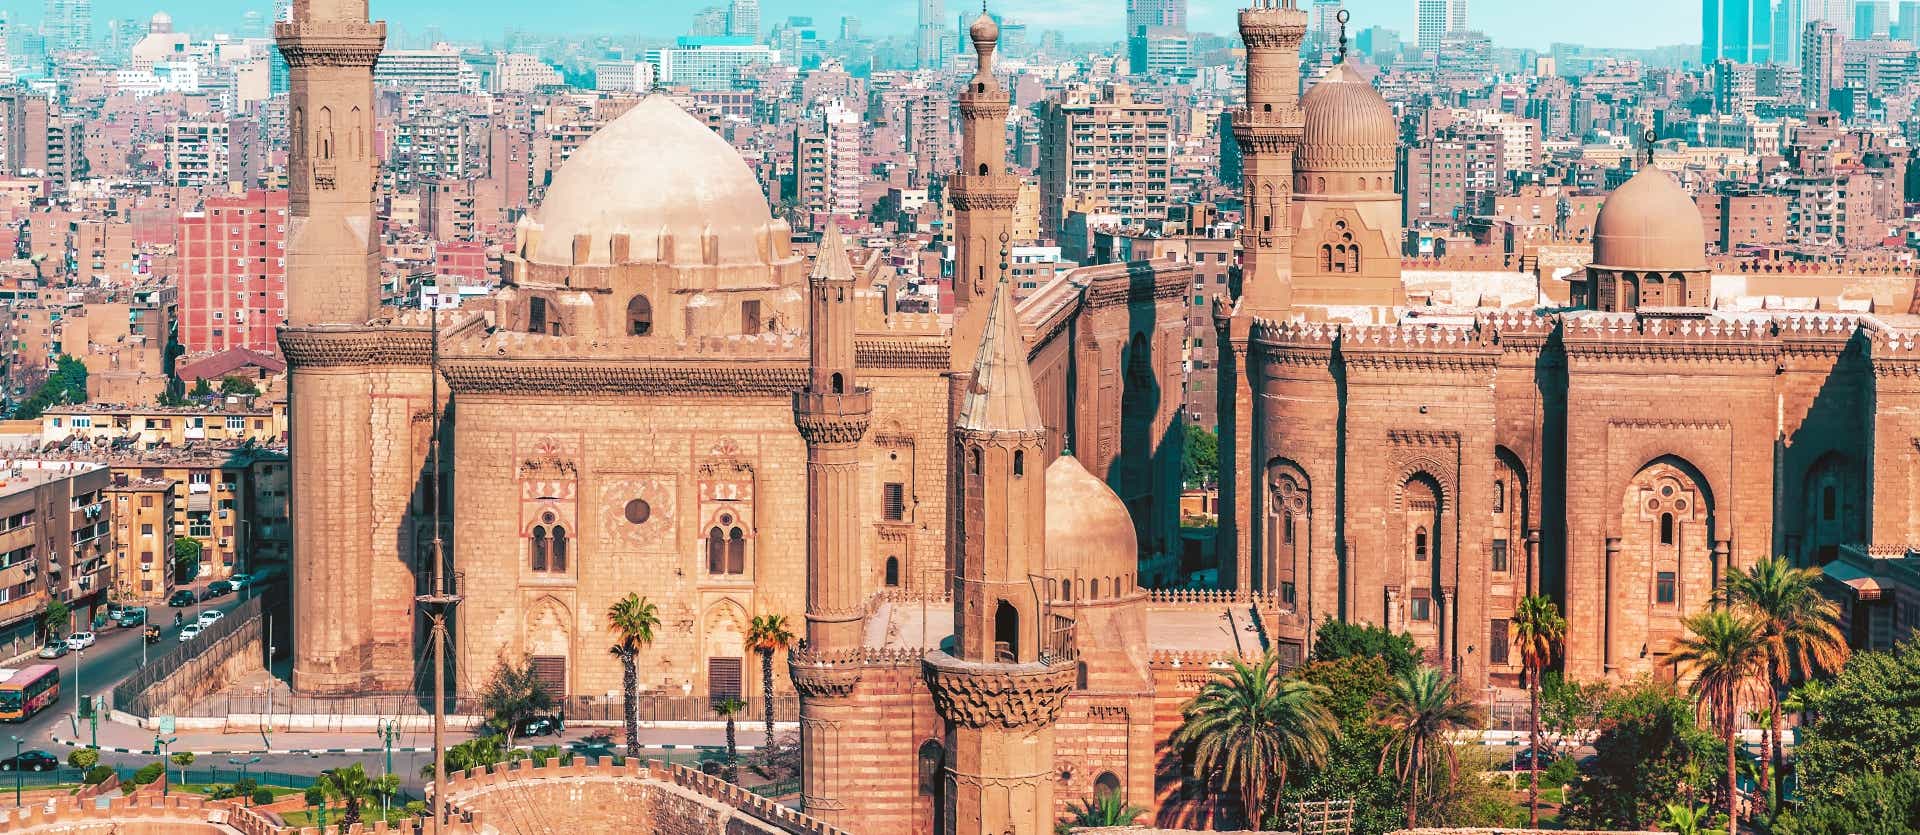 Mezquita del Sultán Hasán <span class="iconos separador"></span> El Cairo <span class="iconos separador"></span> Egipto